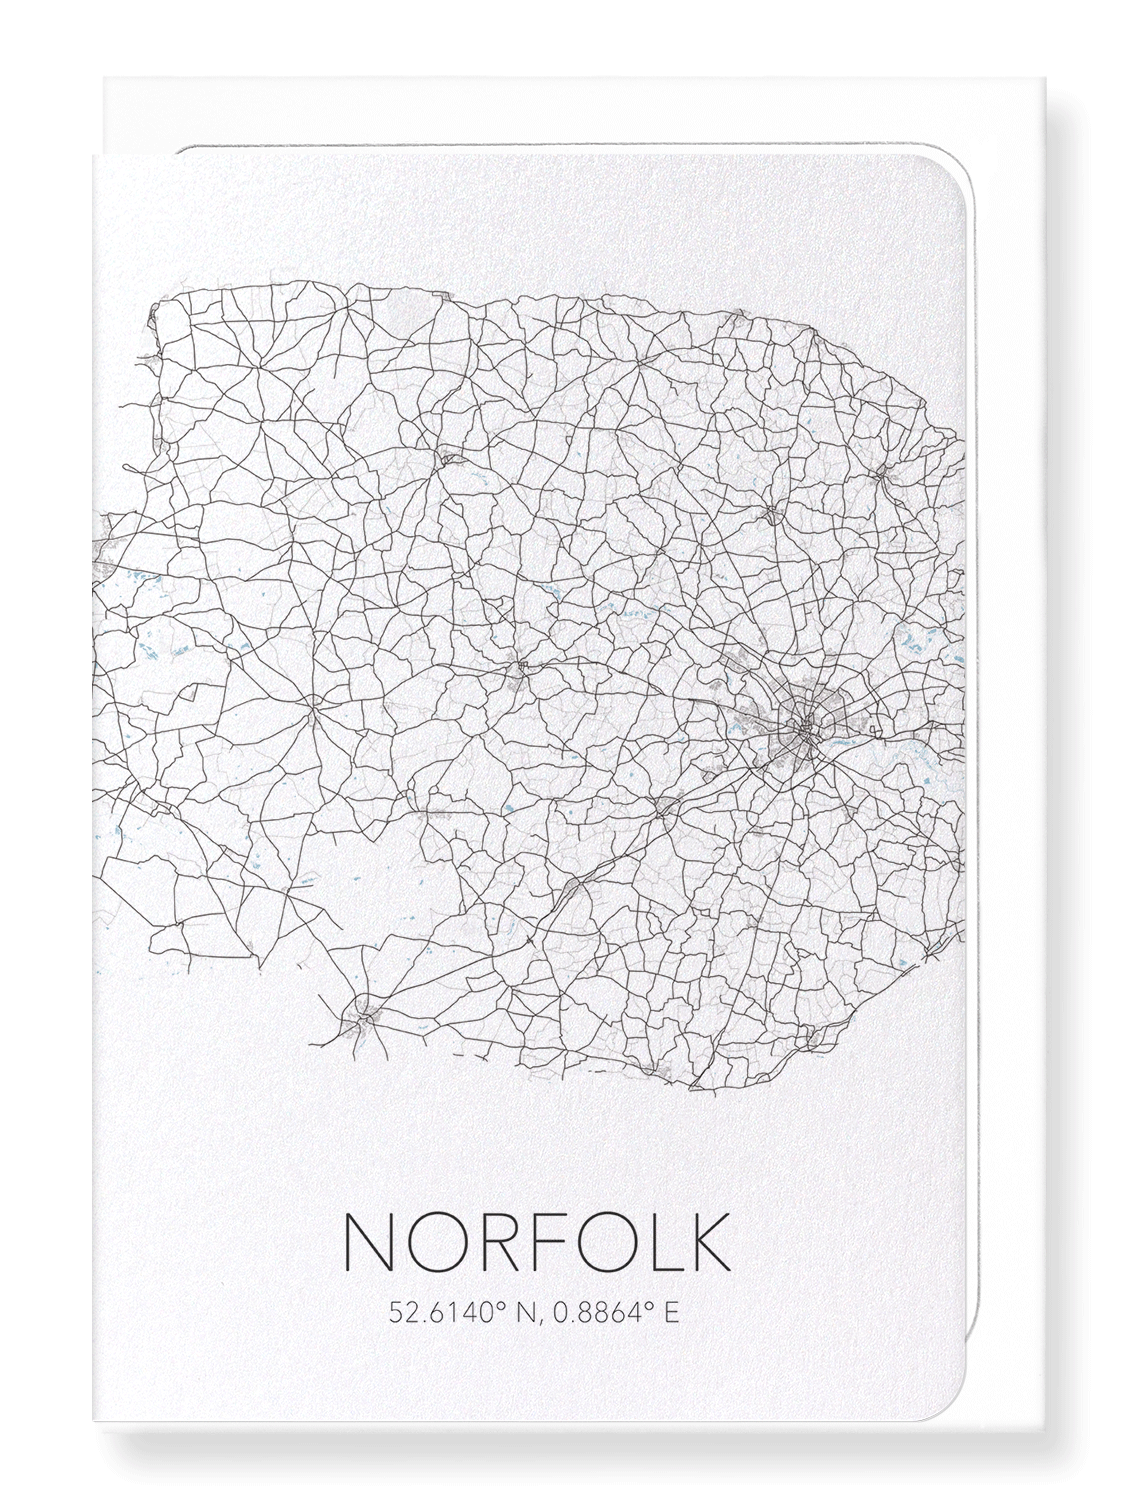 NORFOLK CUTOUT: Map Cutout Greeting Card